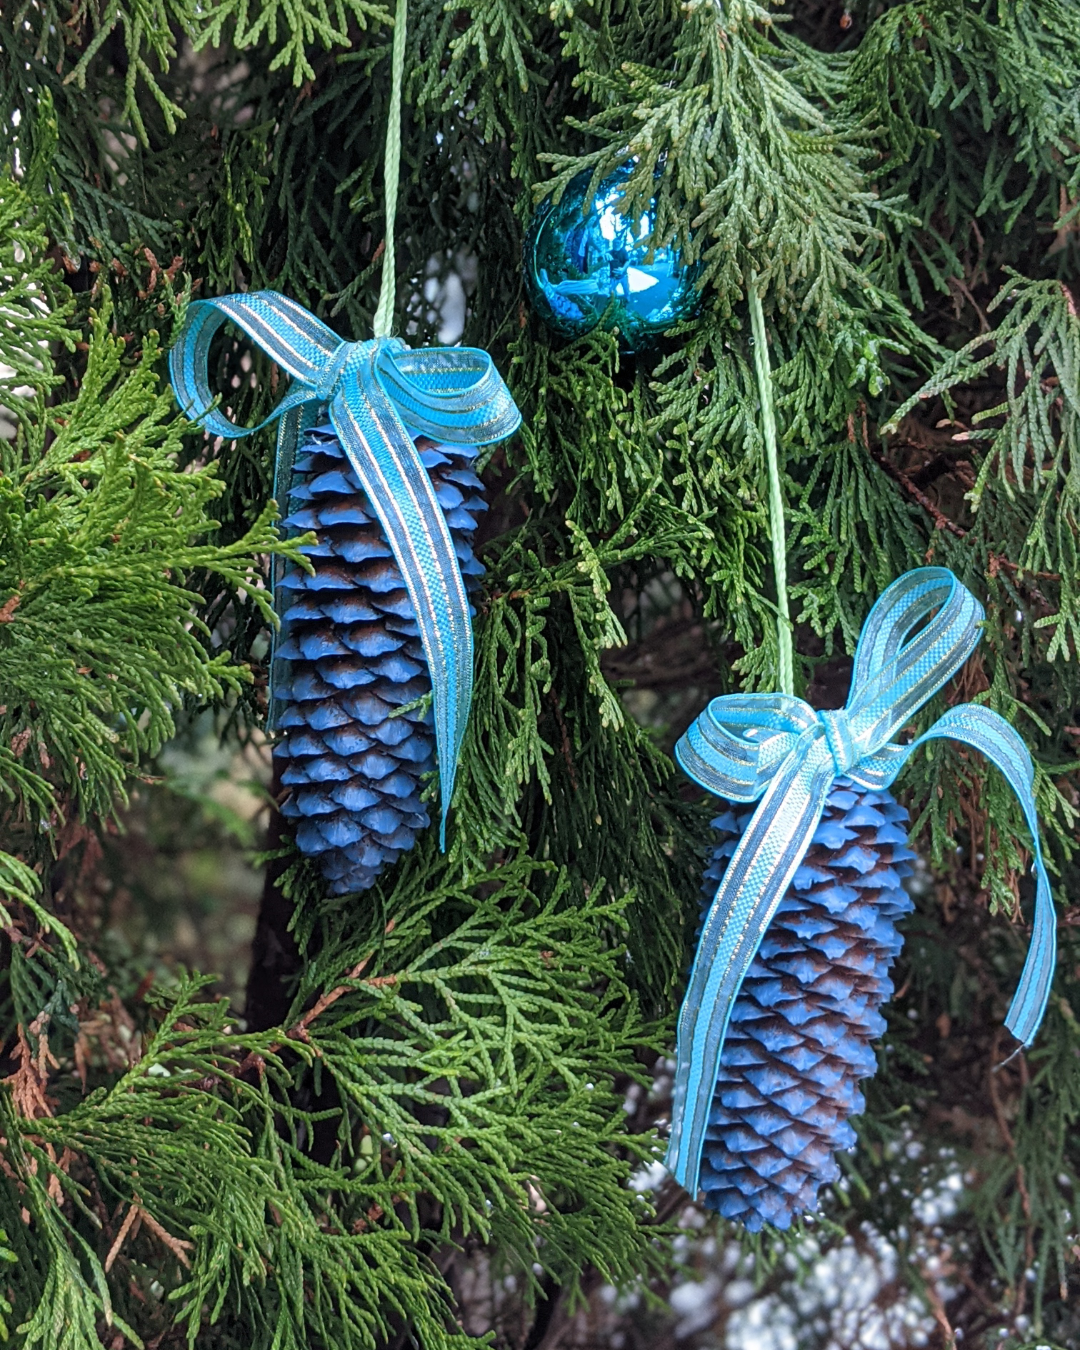 Blue Spruce Pinecone Ornament